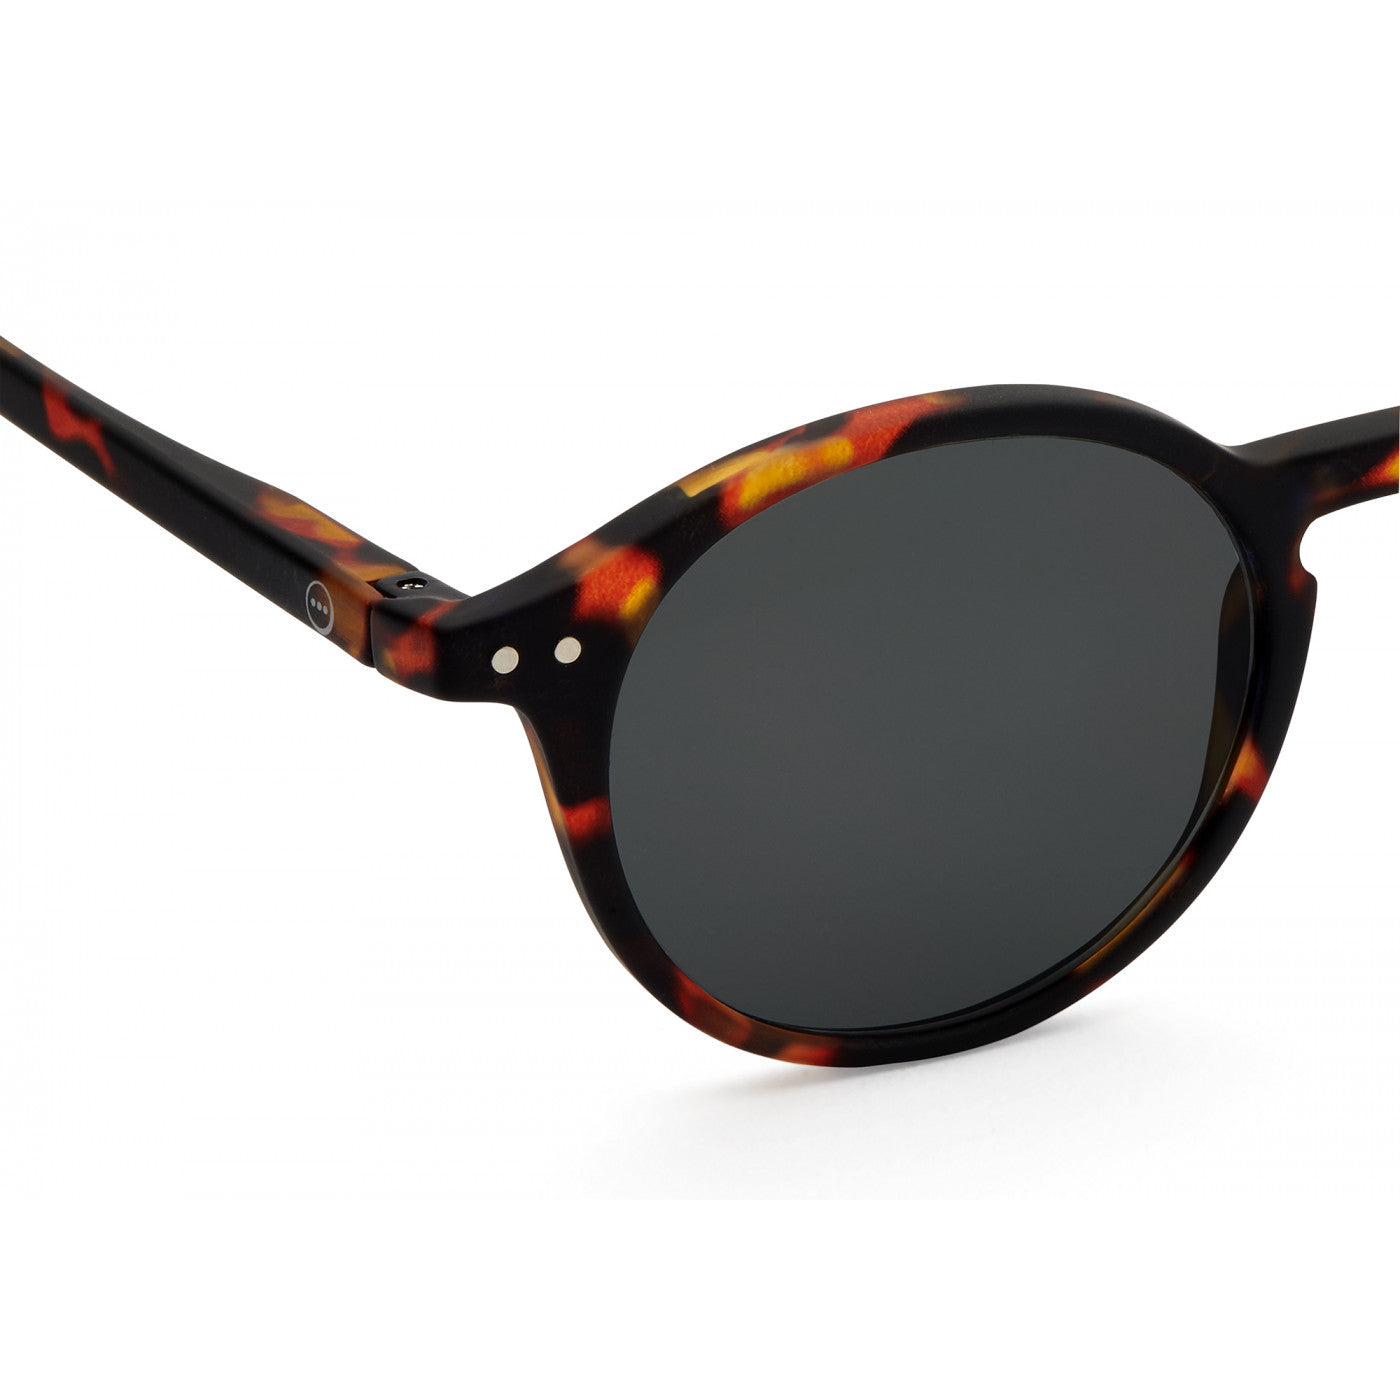 Unisex Sunglasses - Style D - Tortoise